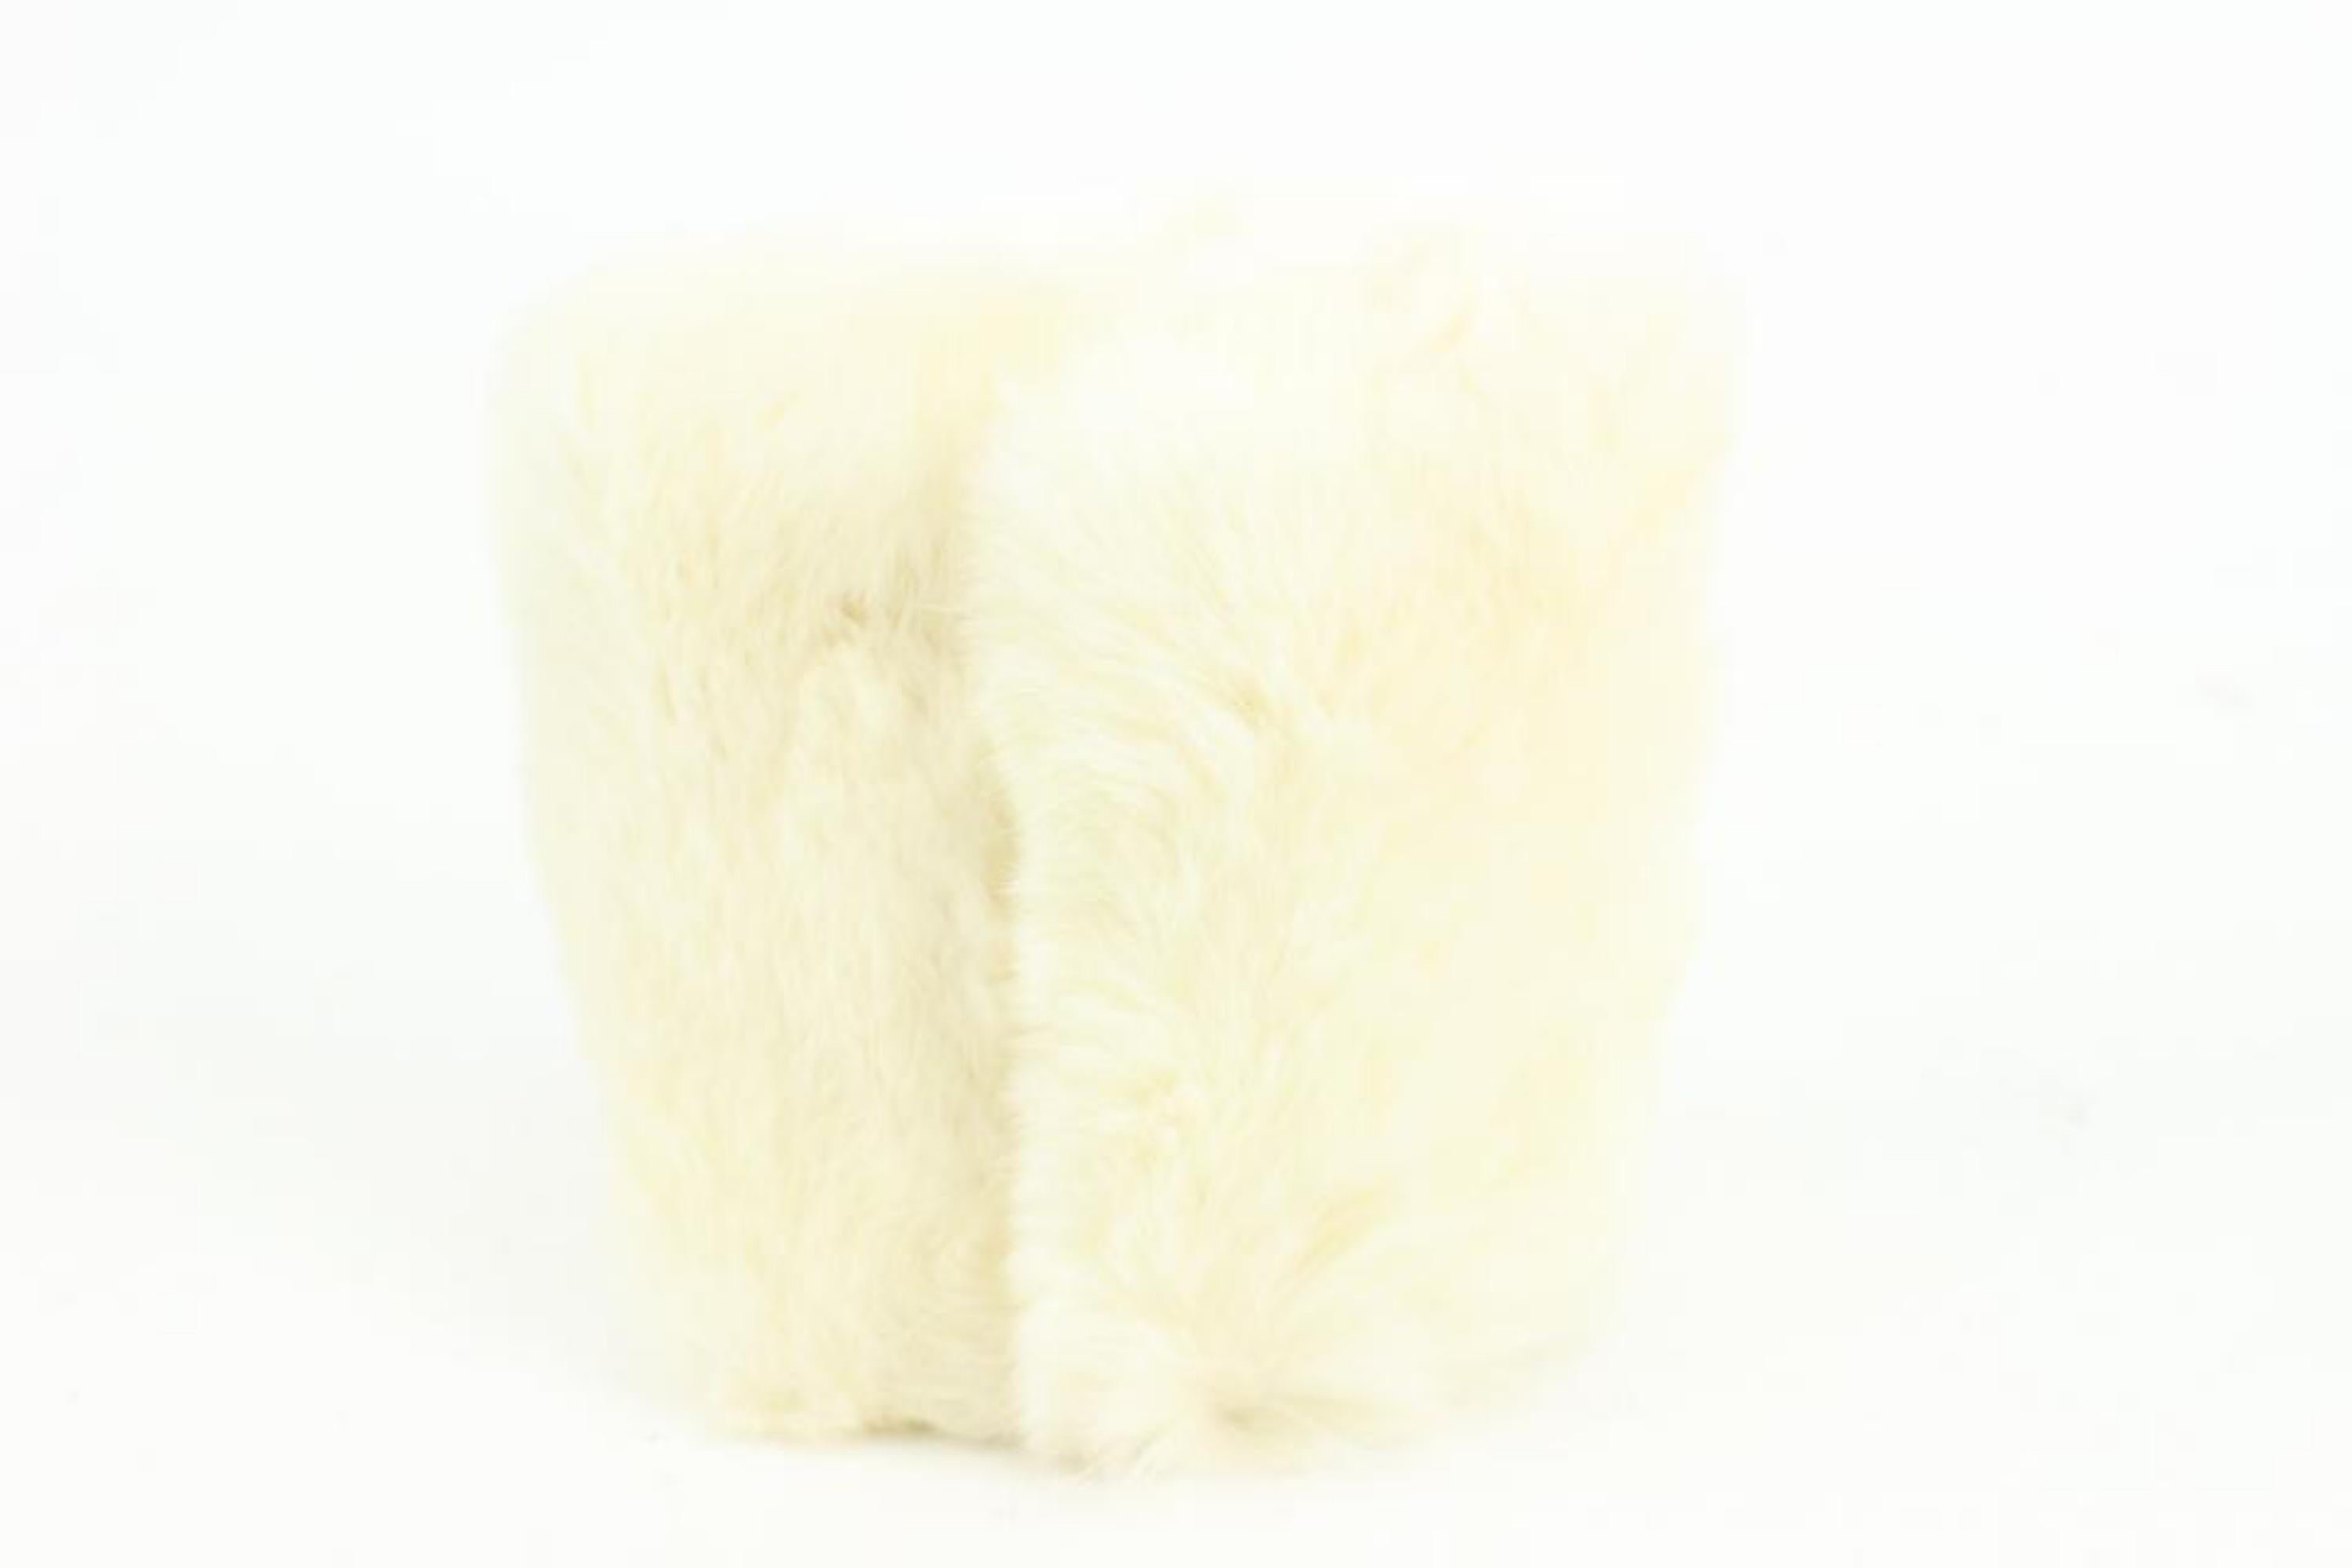 Chanel White x Black CC Rabbit Fur Wrist Band Bracelet s331ck41 For Sale 1